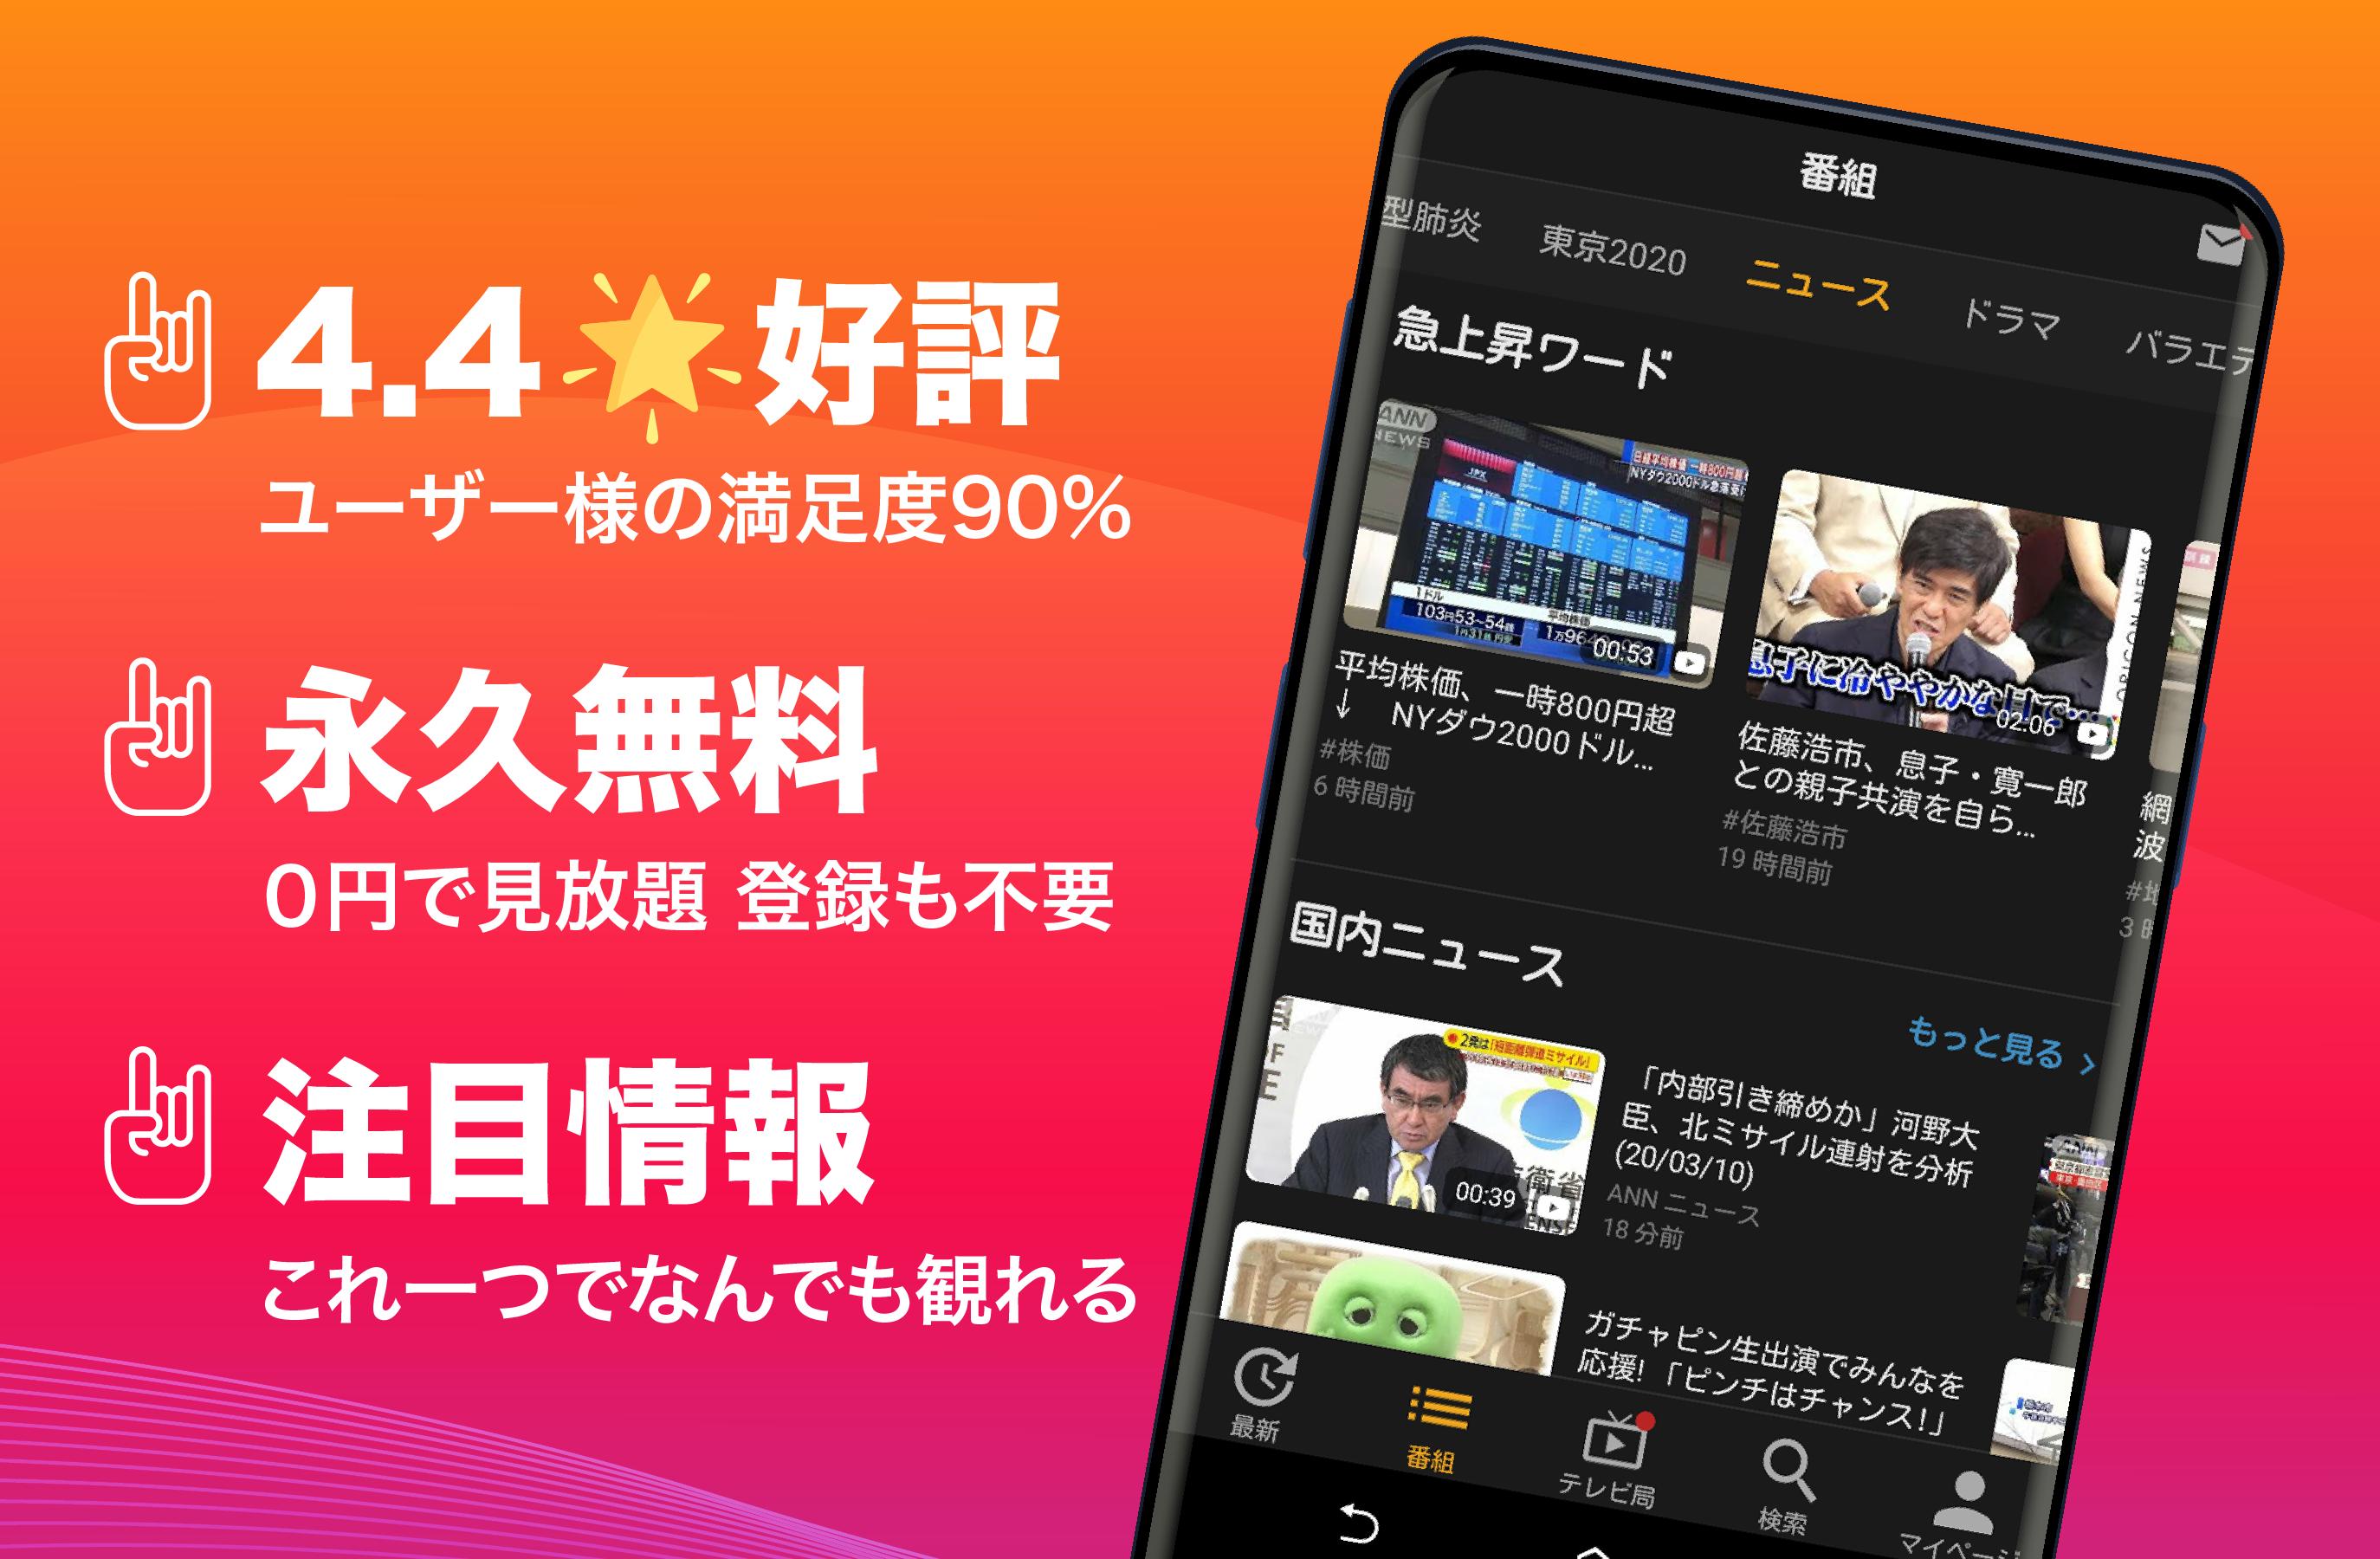 (JP)テレビ 9.21 Screenshot 1